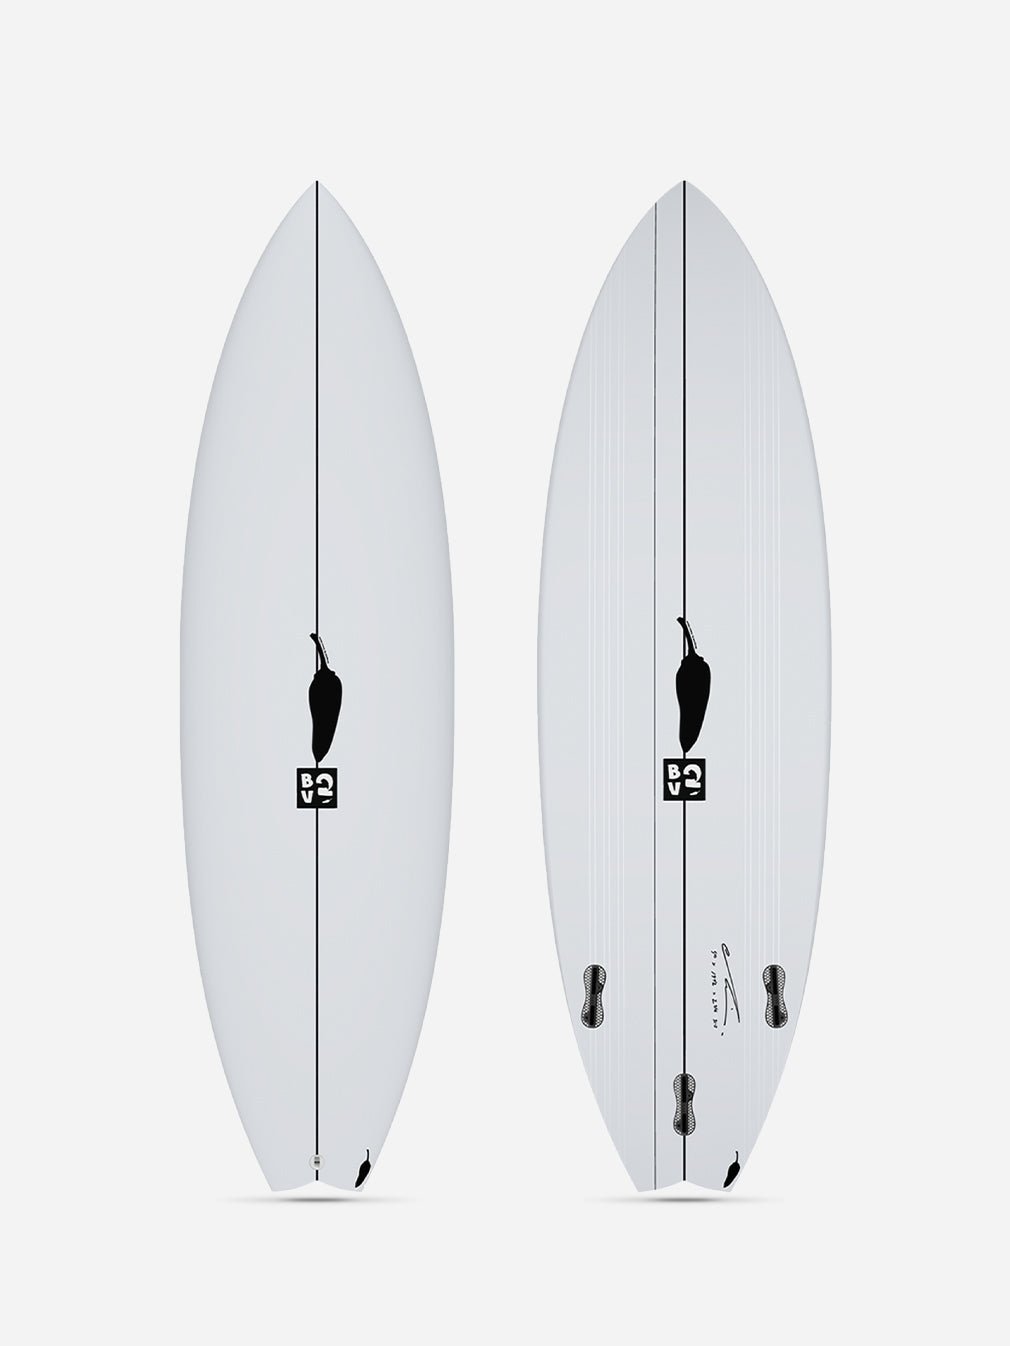 BV2 Chilli Surfboard - Youth Lagoon